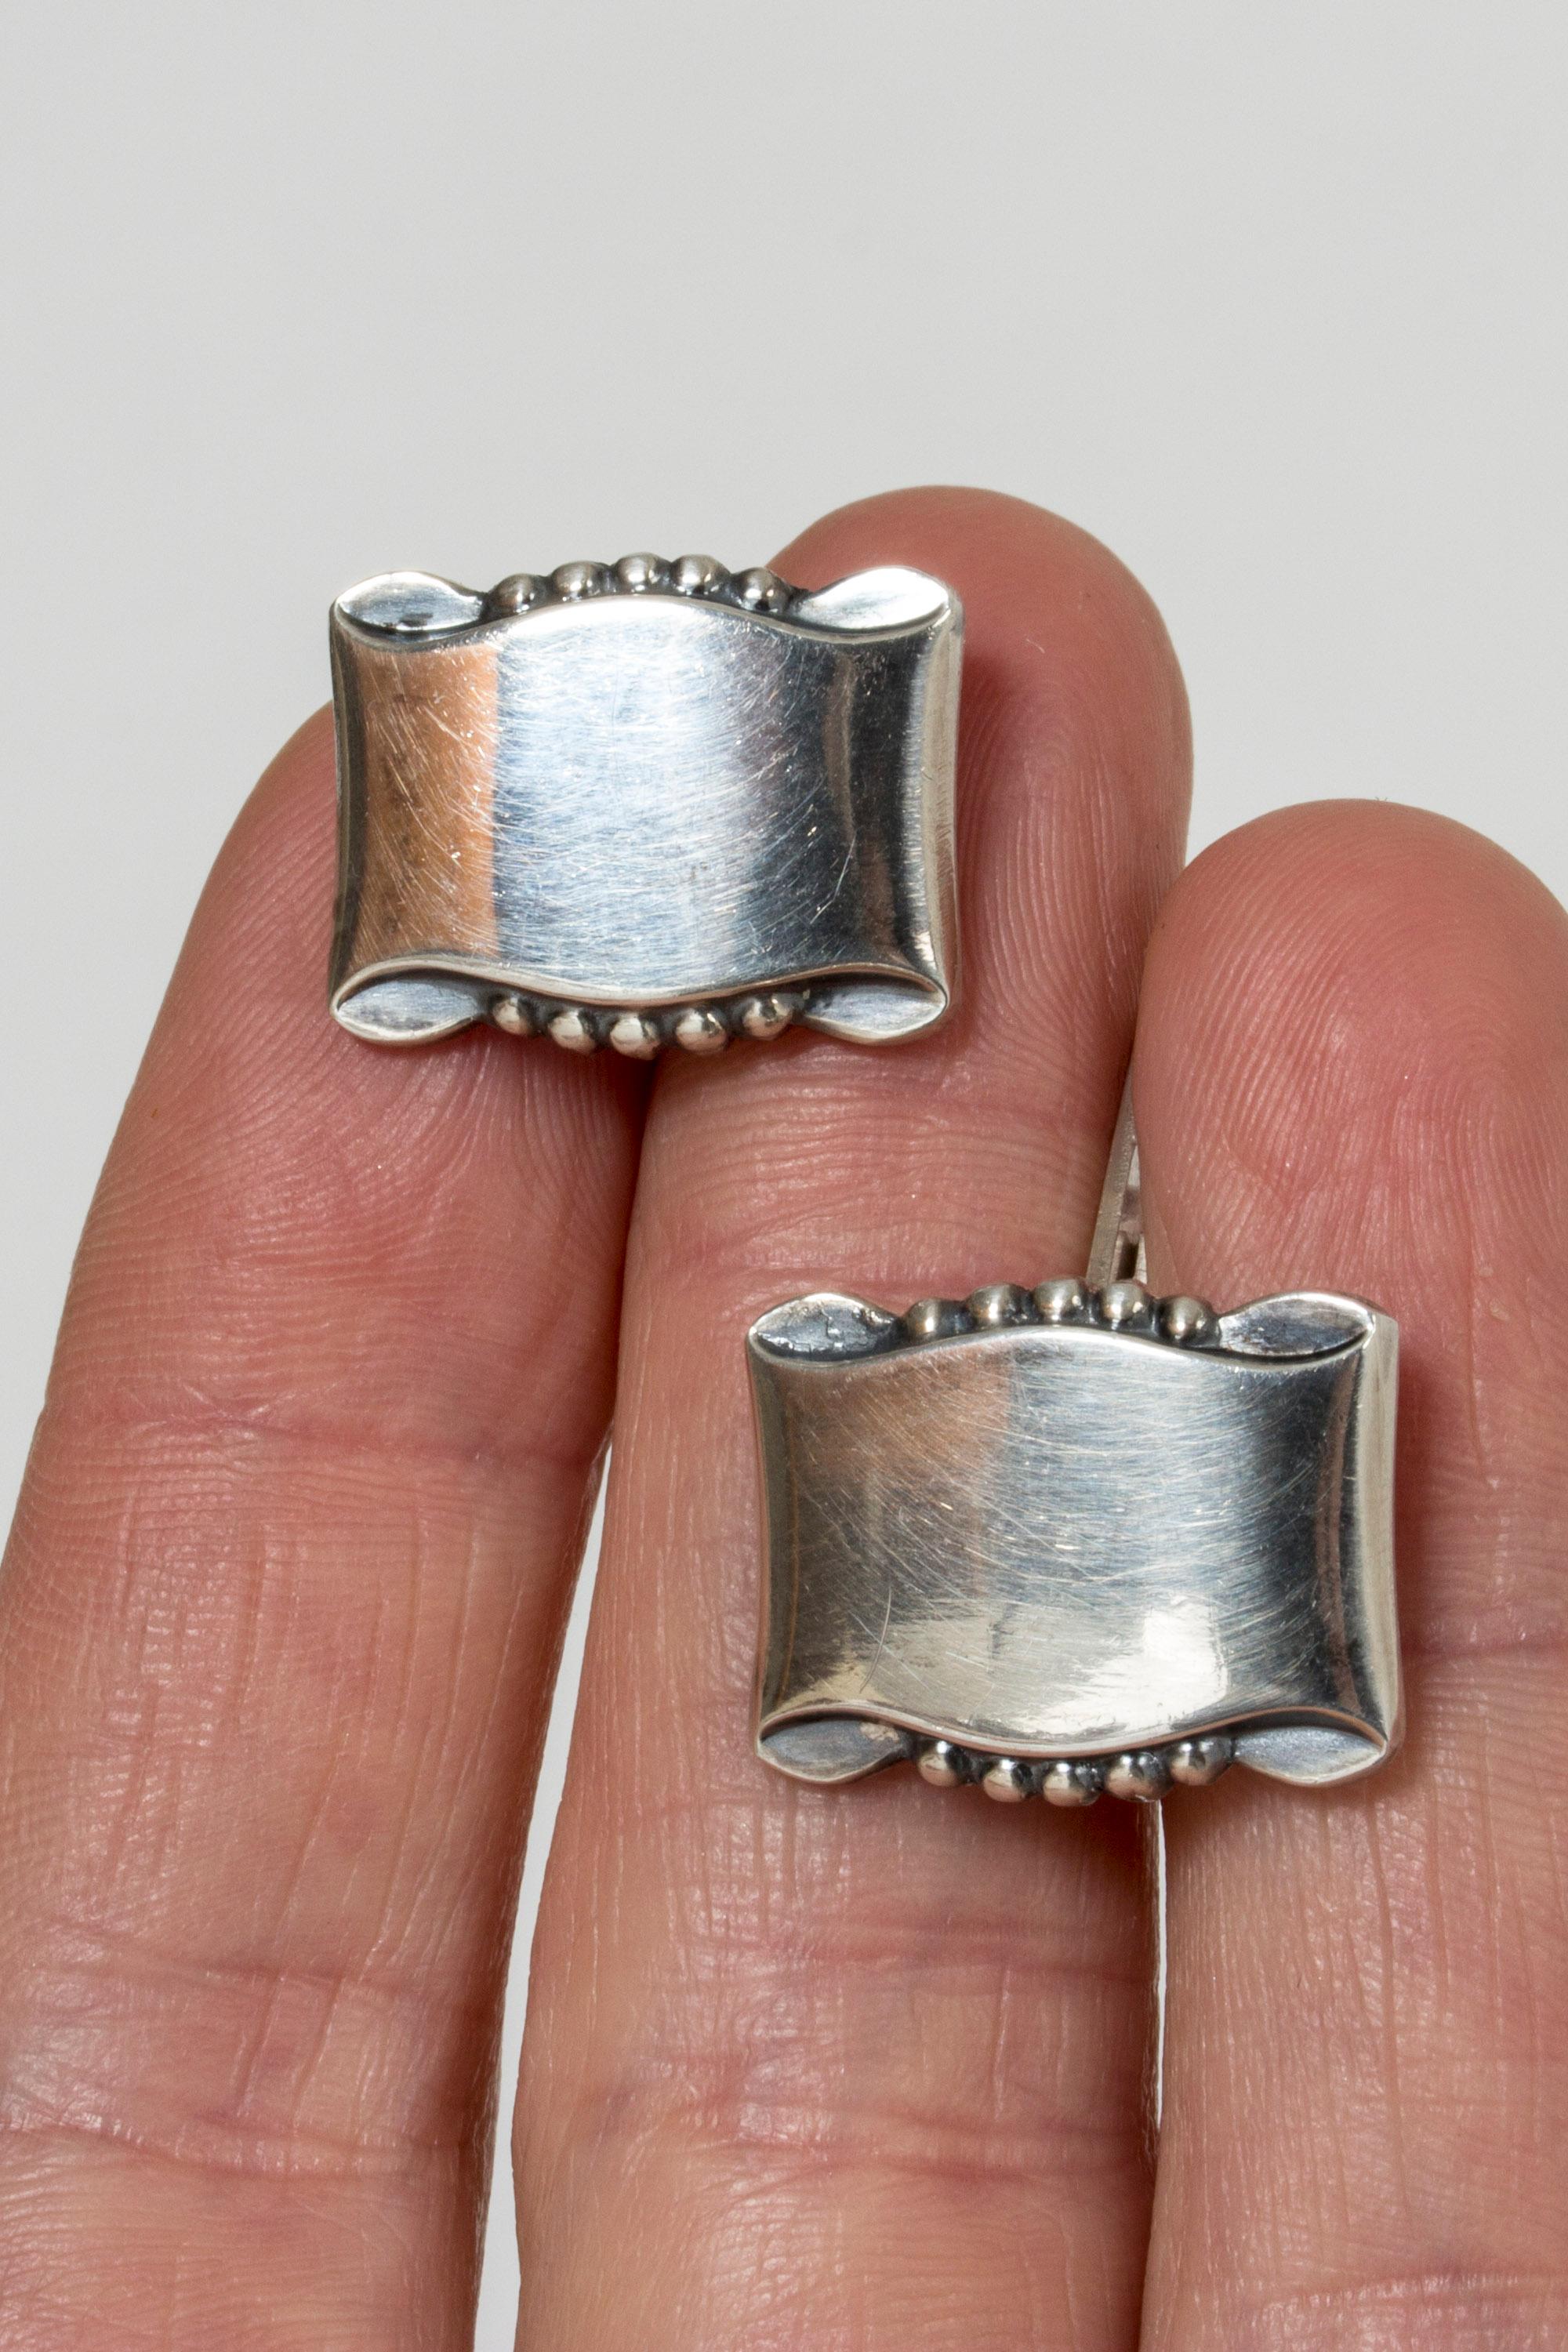 Pair of elegant silver cufflinks from Gustaf Dahlgren & Co. Bowlike, understated design.
